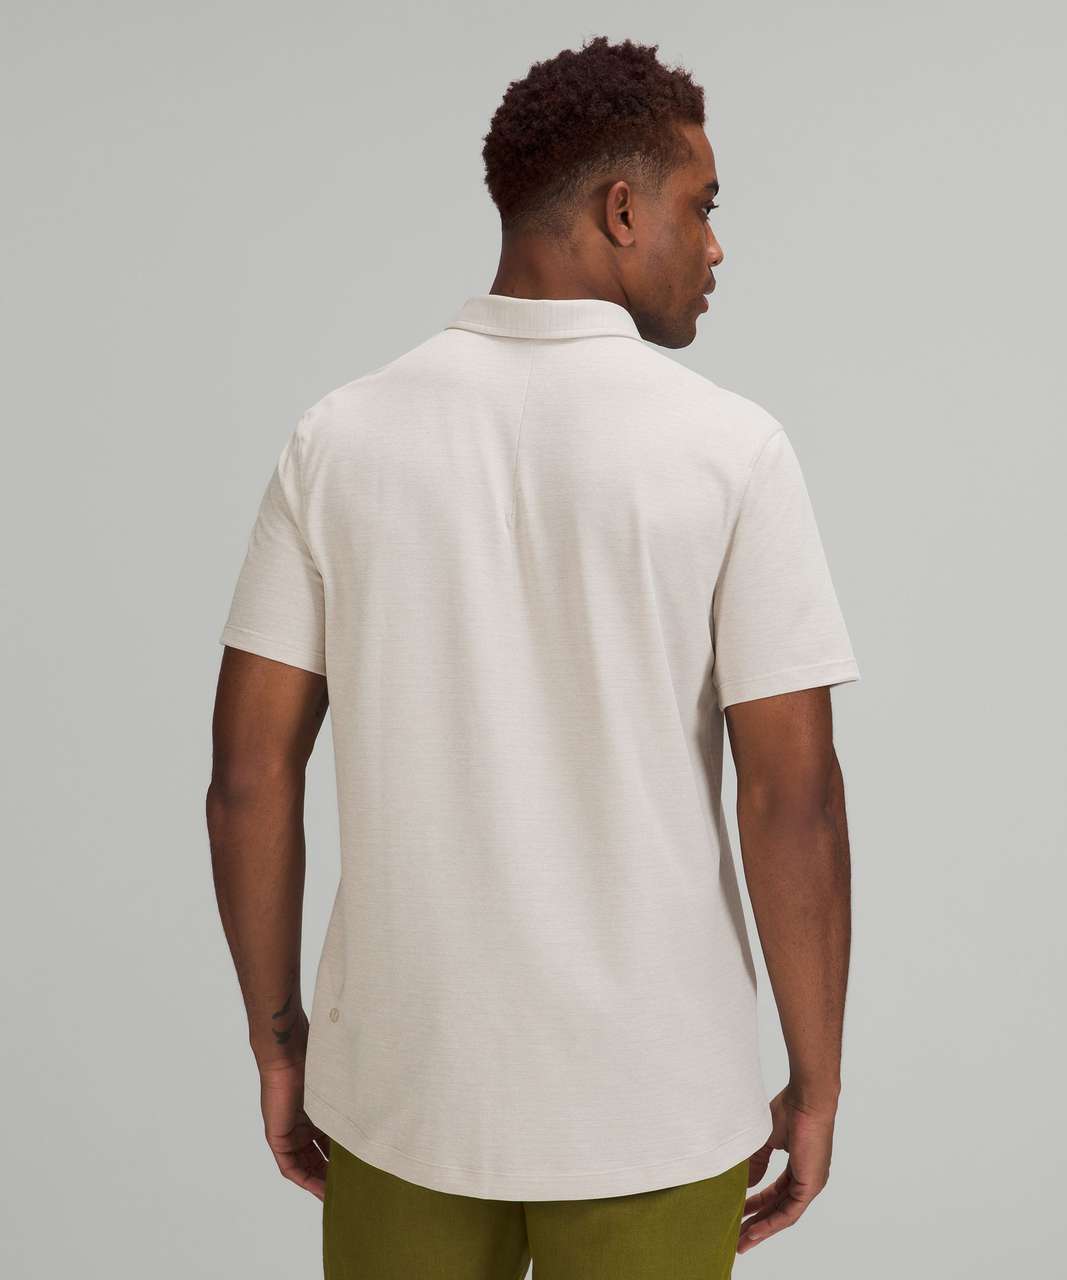 Lululemon Evolution Short Sleeve Polo Shirt *Pique Fabric